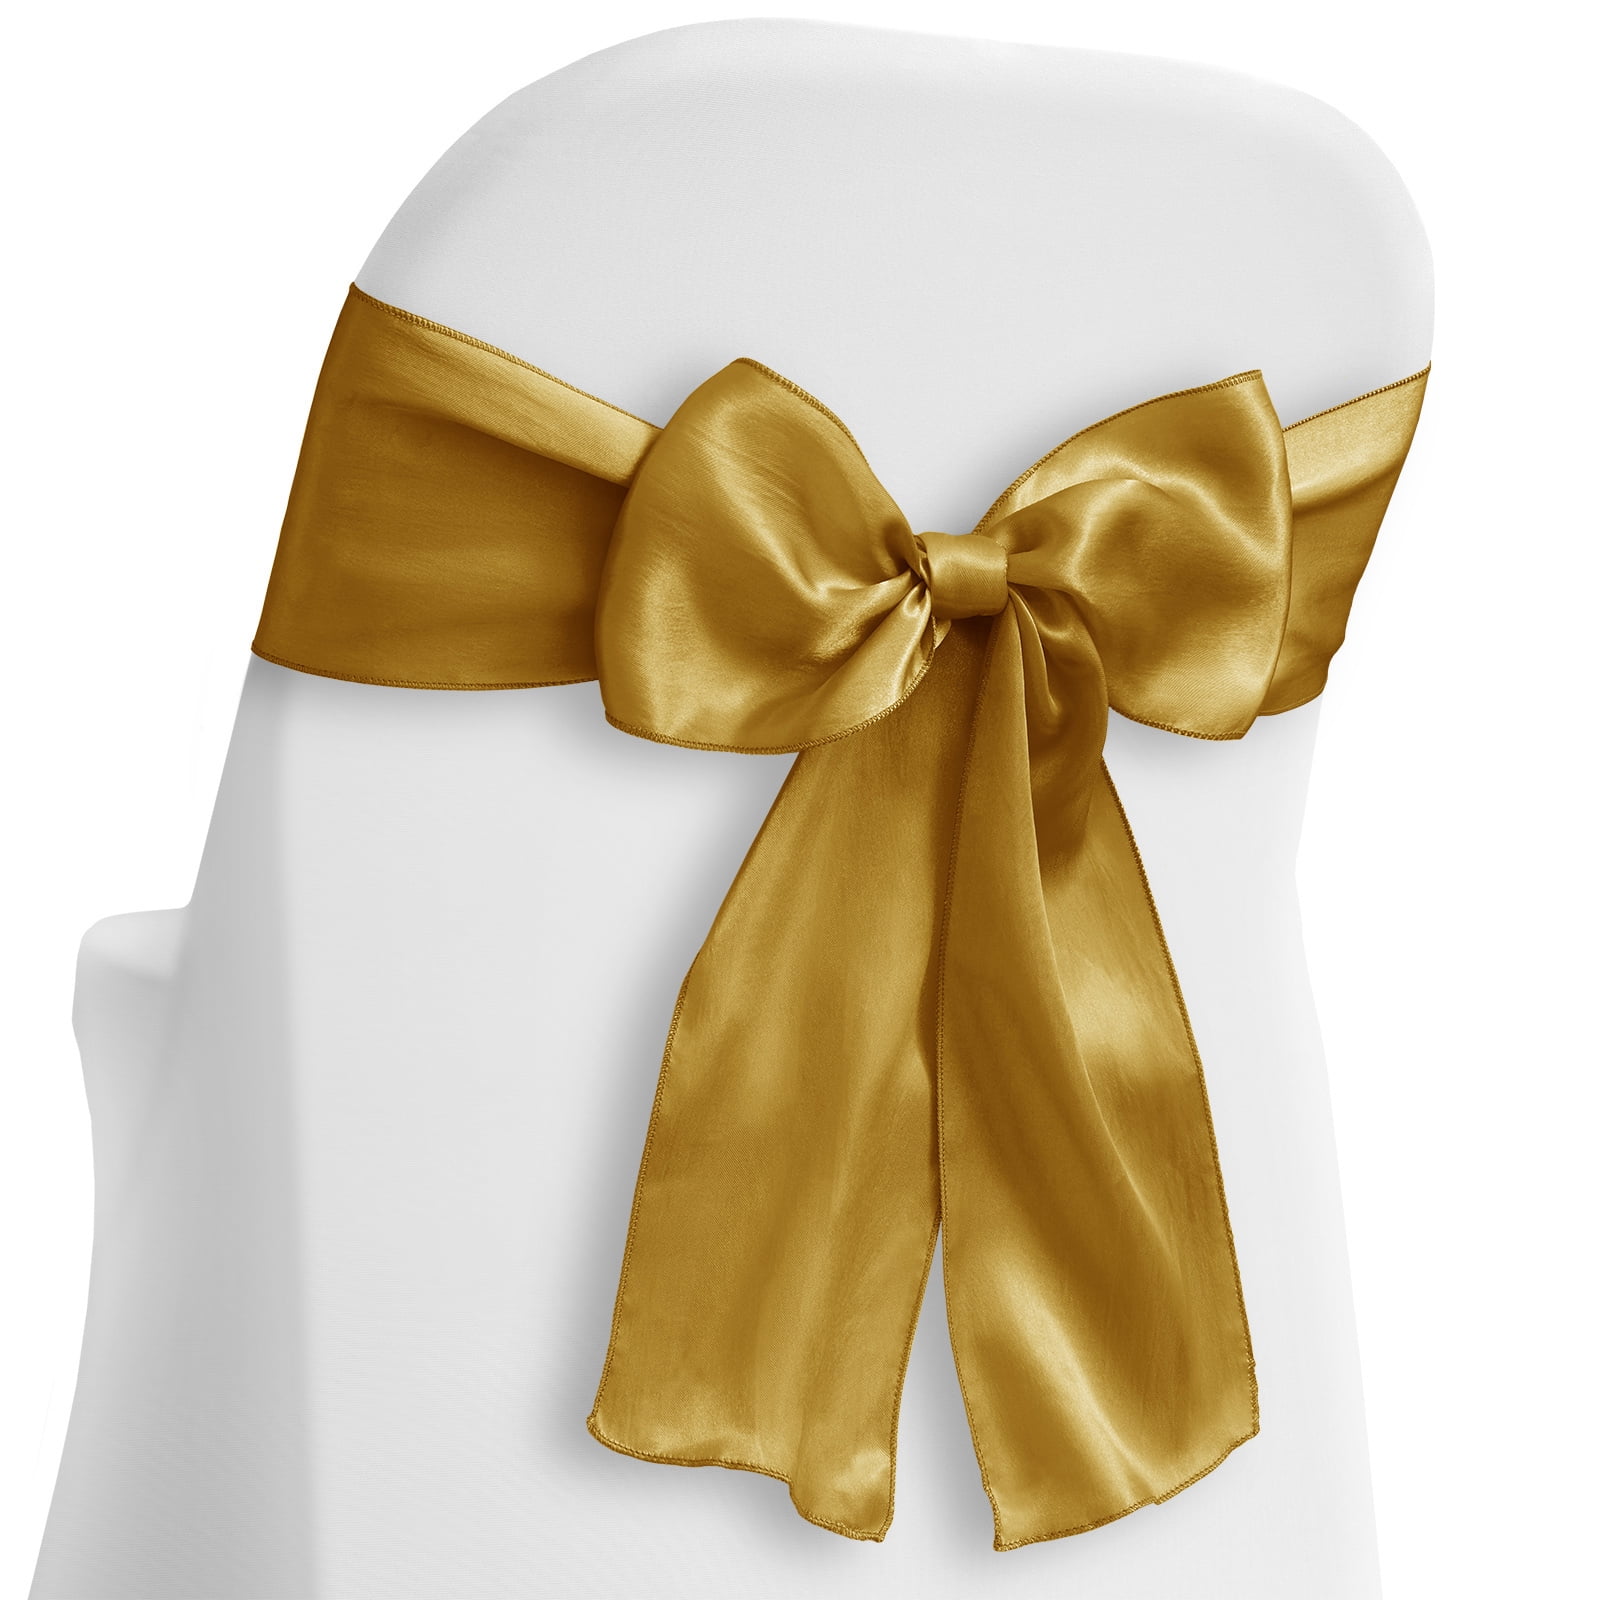 100 Gold Organza Sashes Chair Cover Bows Wedding Sashes 